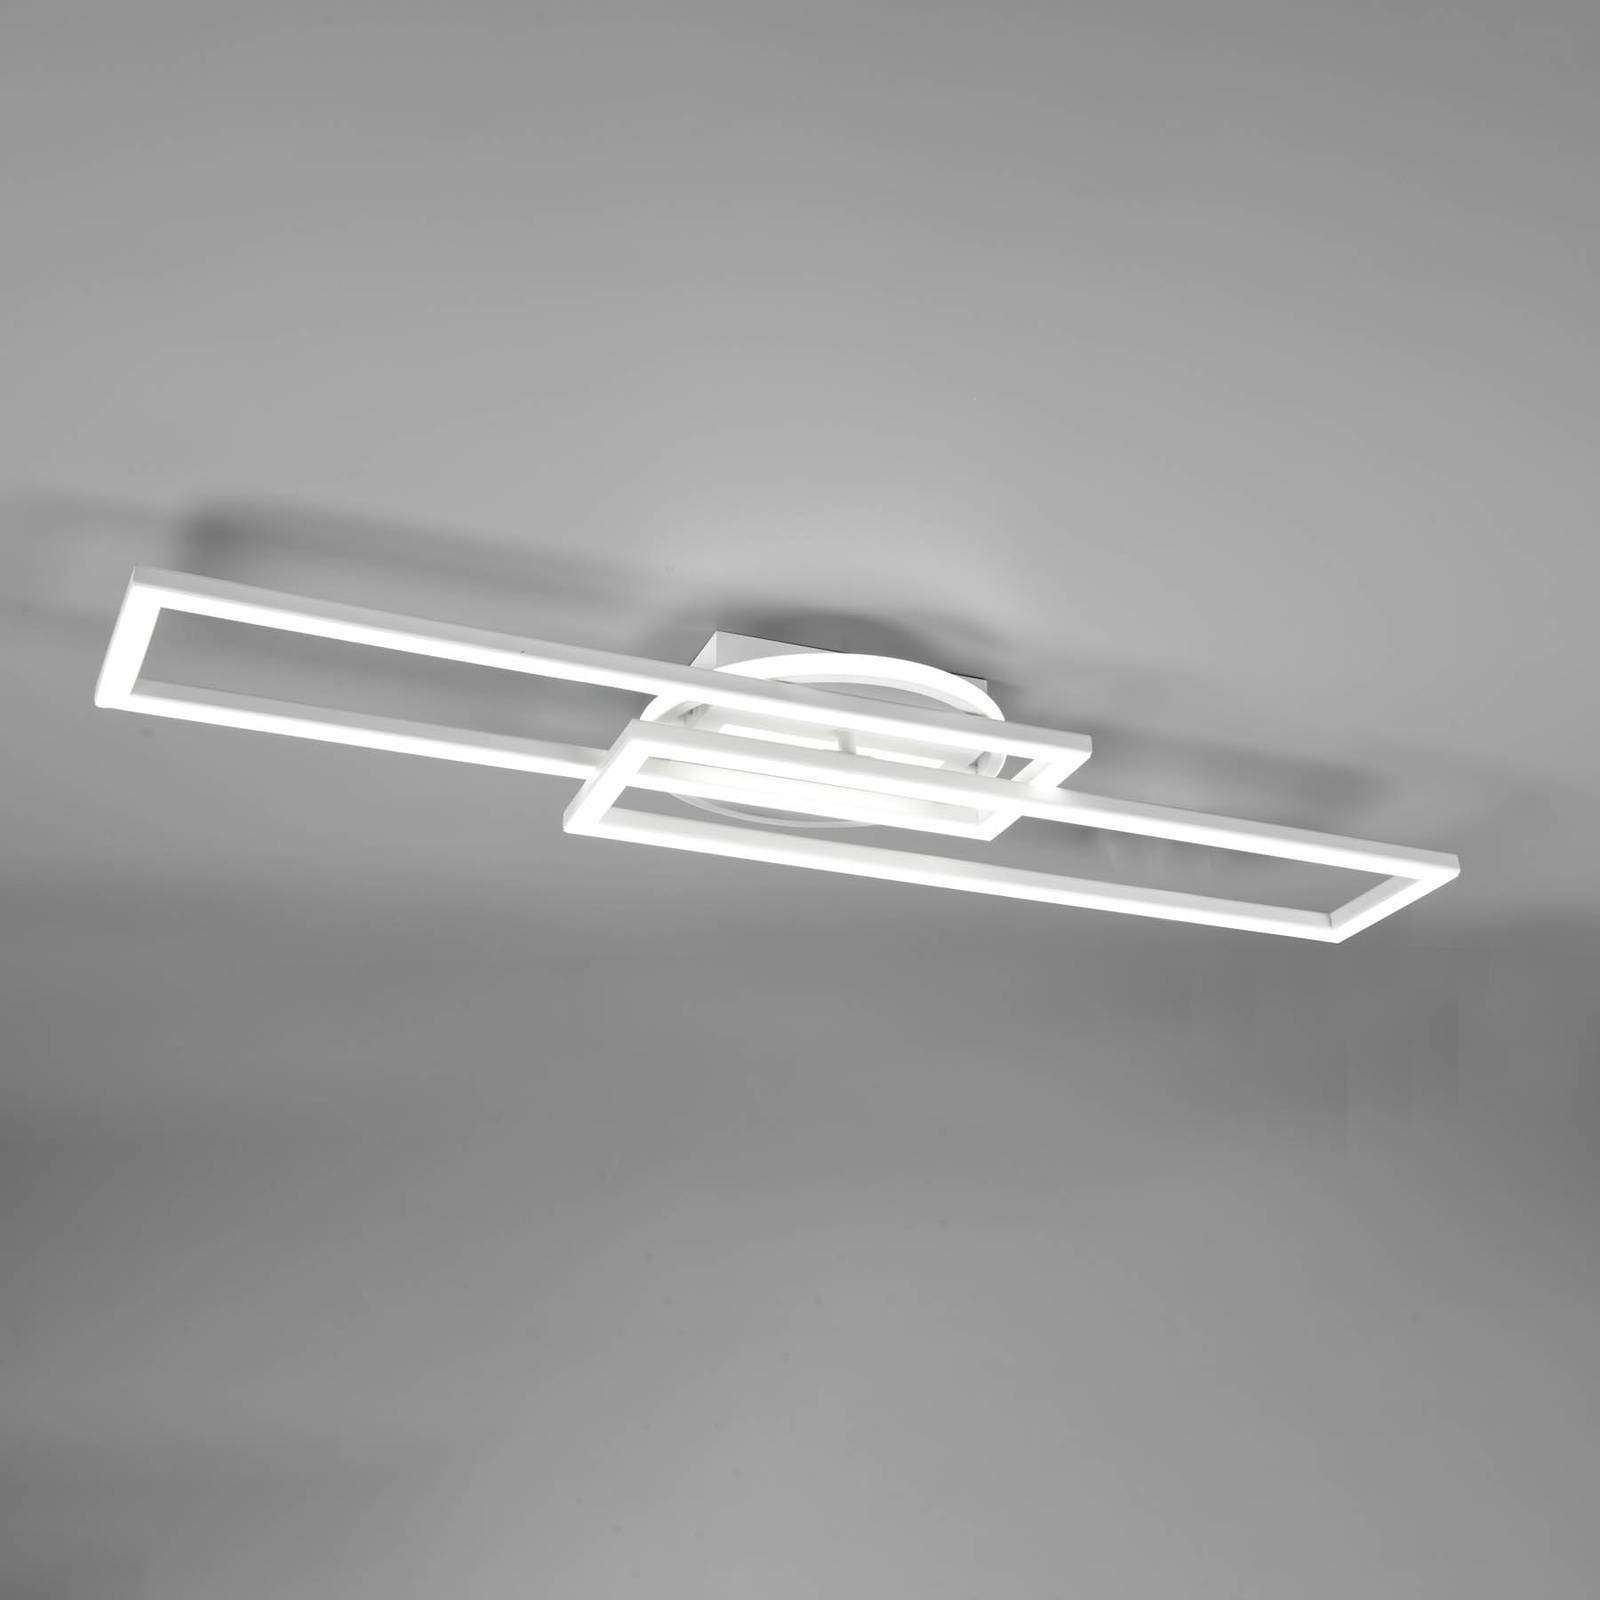 Image of Reality Leuchten Plafonnier LED Twister, pivotant, Remote, blanc 4017807540529